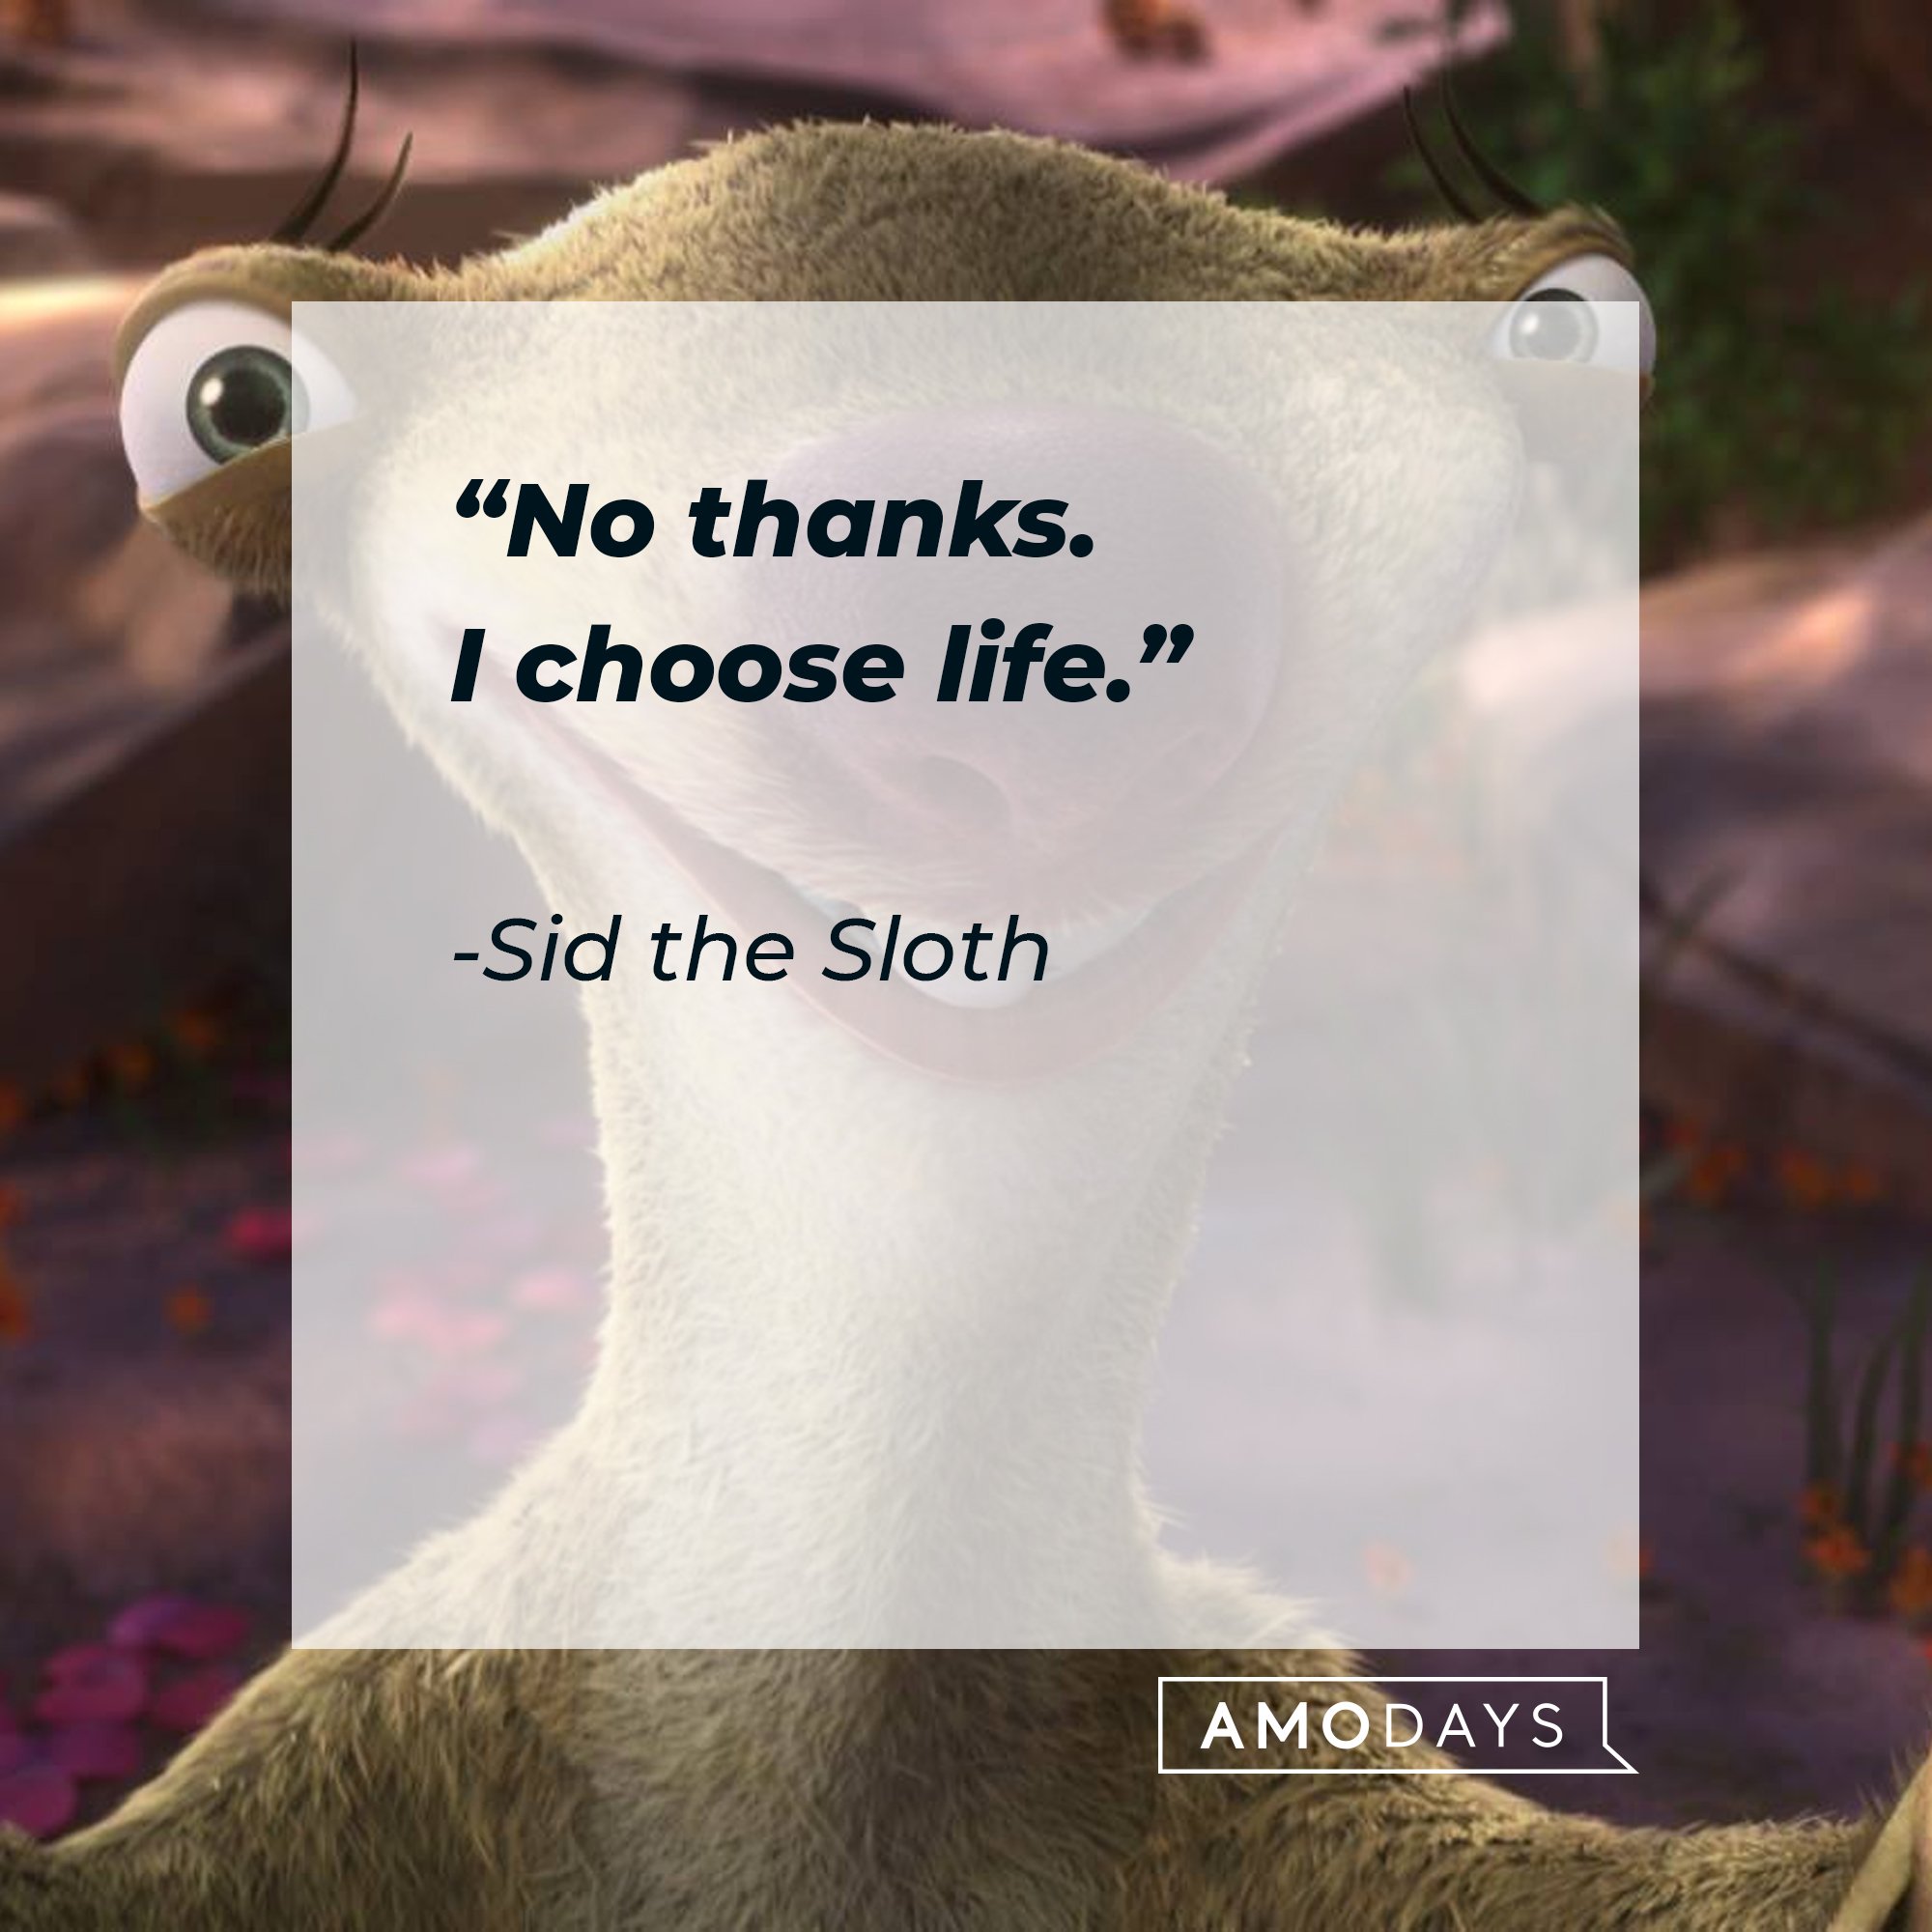  Sid the Sloth's quote: “No thanks. I choose life.” | Image: AmoDays